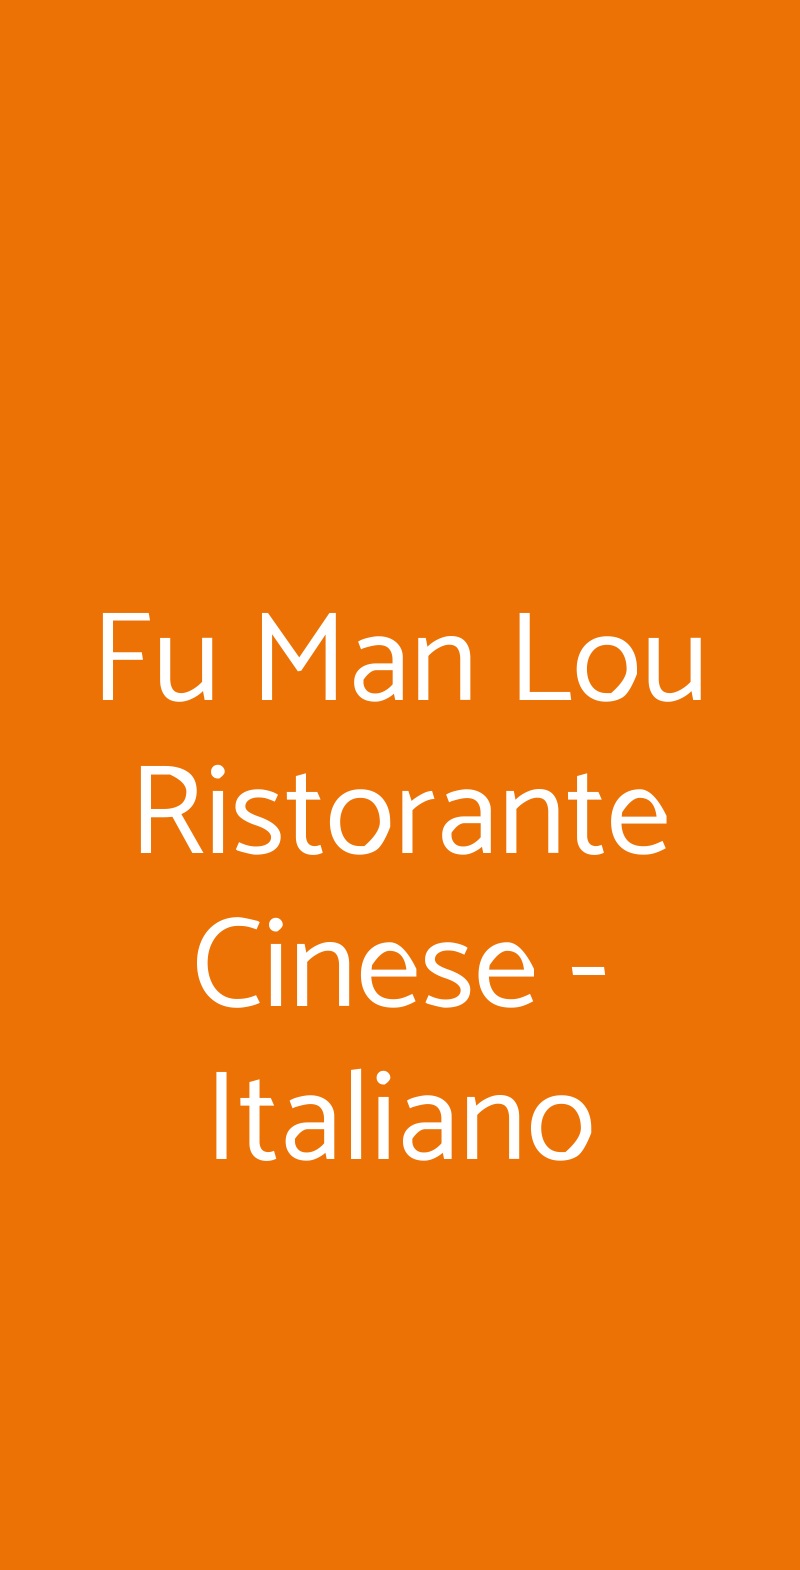 Fu Man Lou Ristorante Cinese - Italiano Moncalieri menù 1 pagina